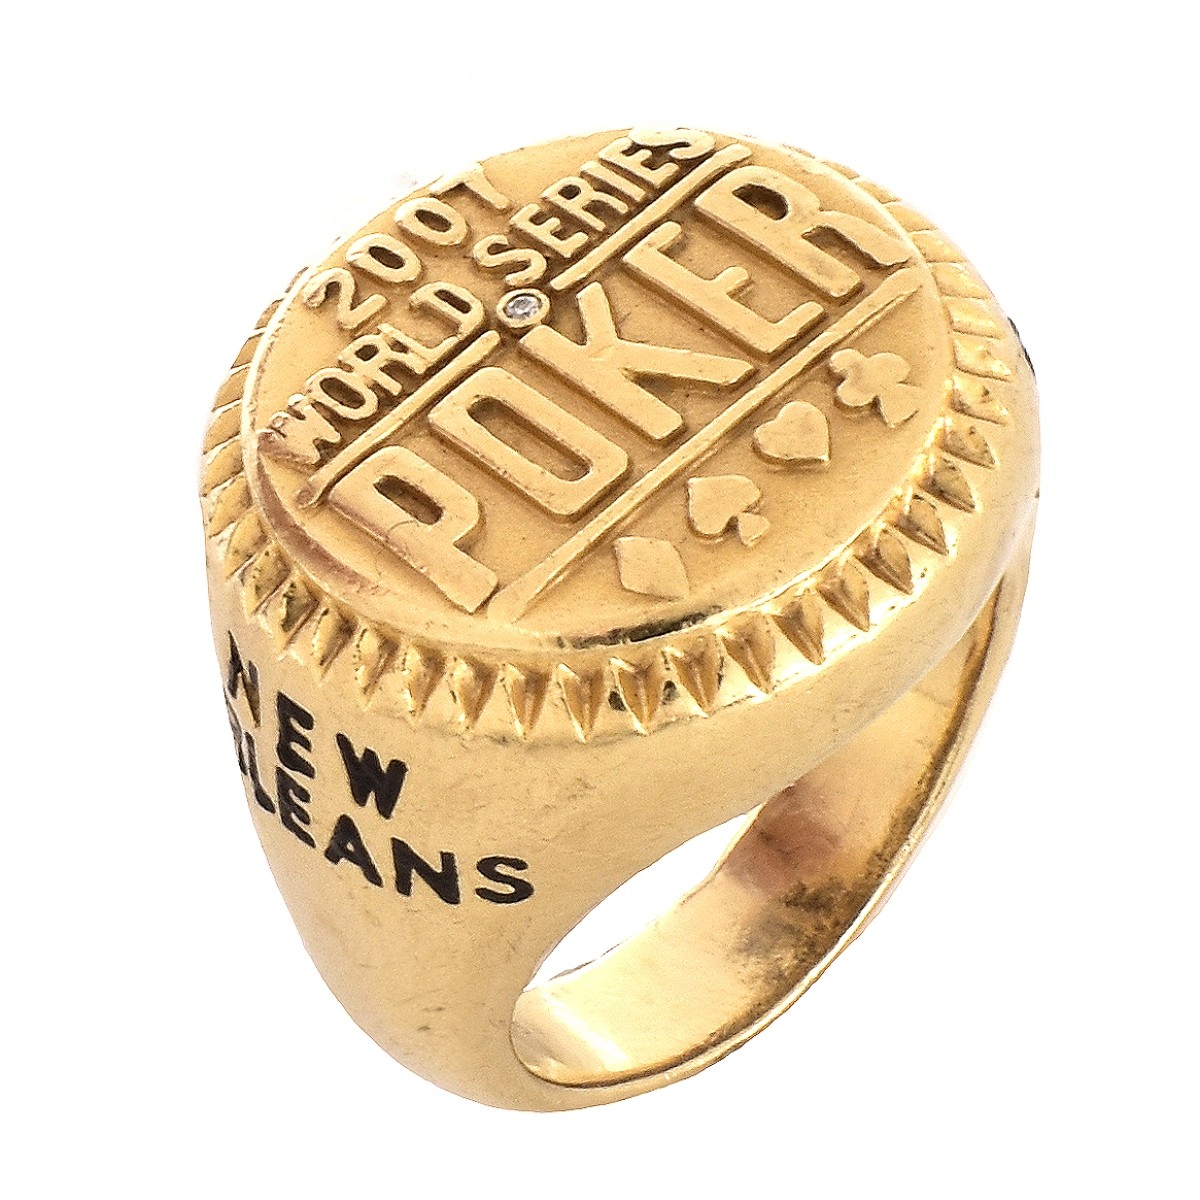 Man's 14K Gold World Series Poker Ring